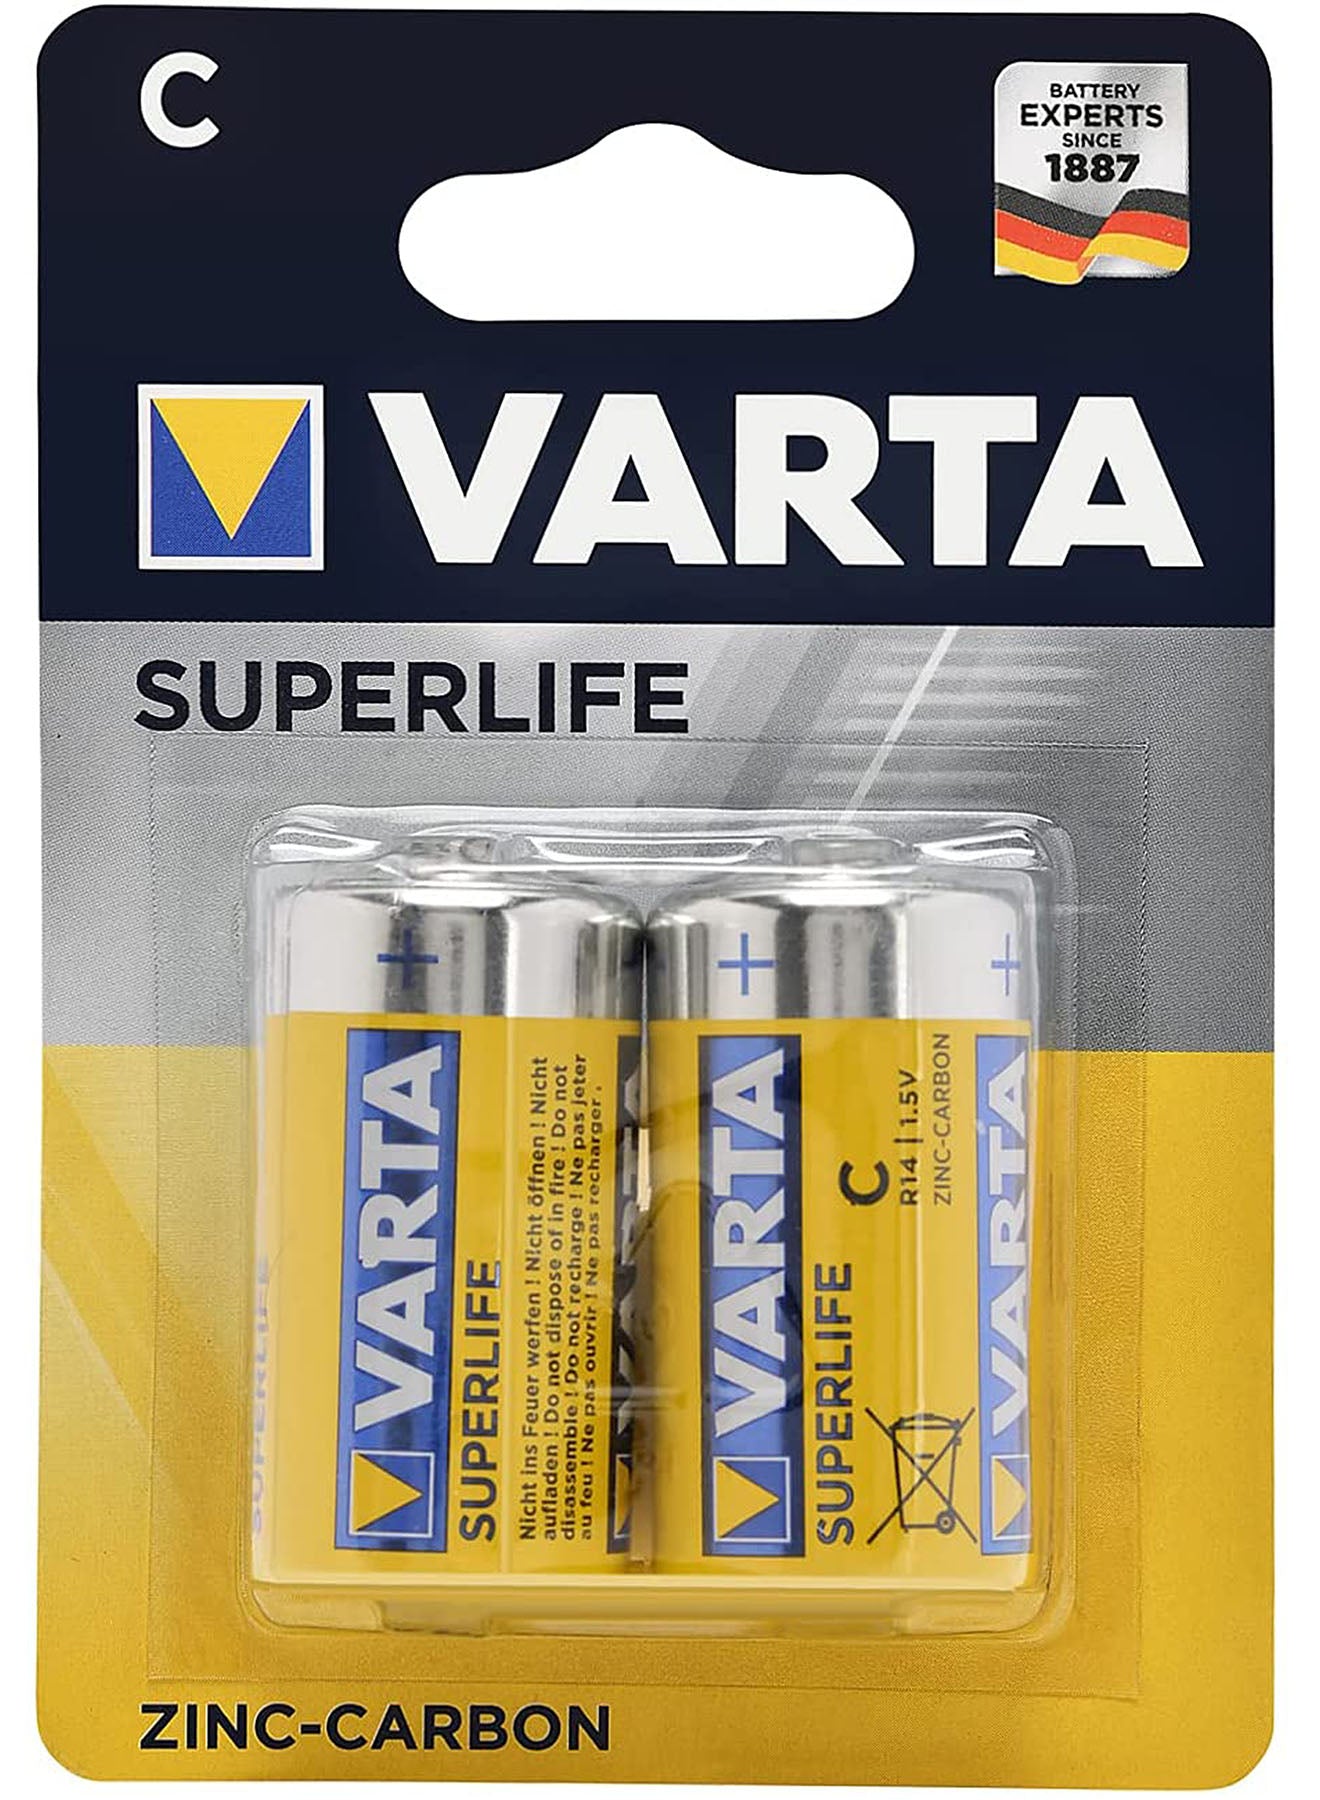 Varta Superlife C Battery 2 Units